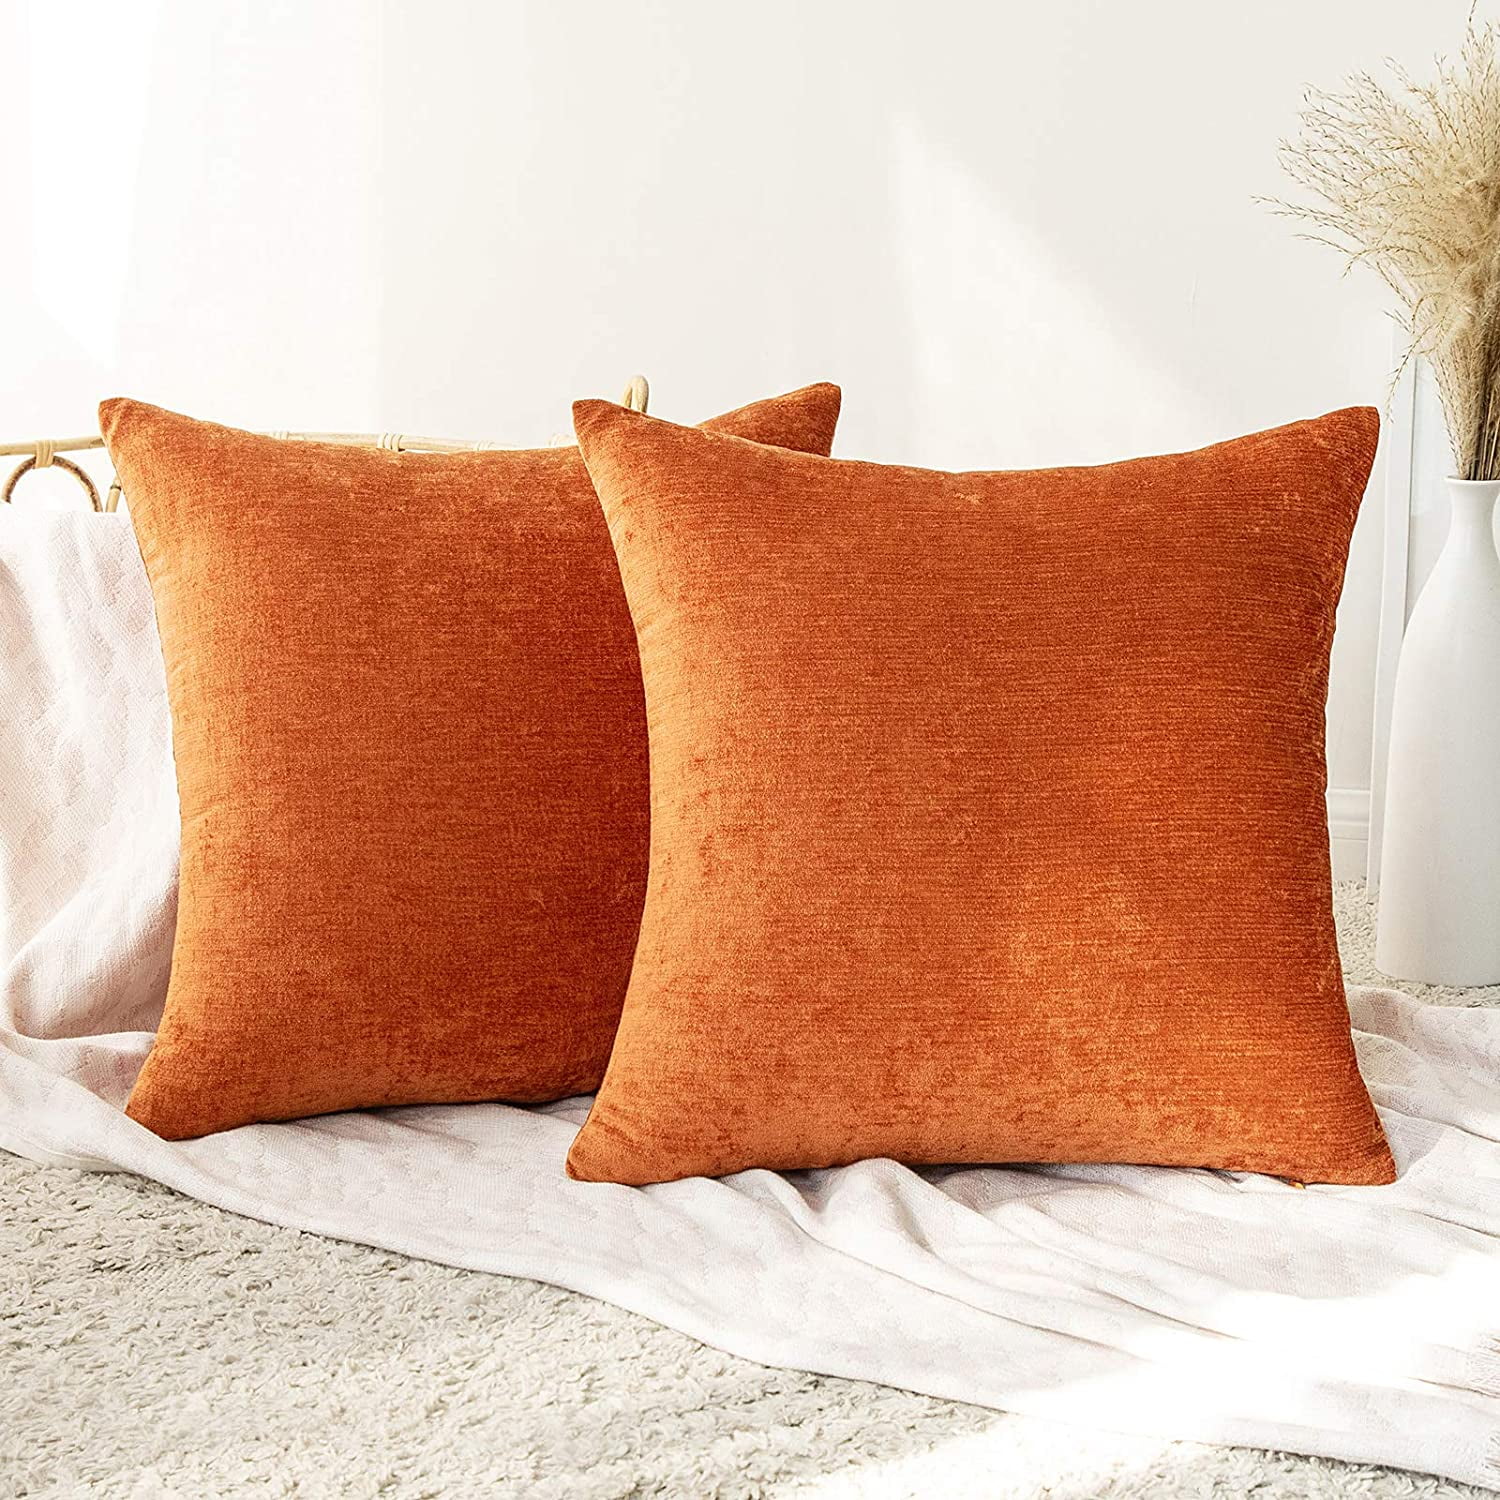 SUNSHINE FASHION Decorative Linen Chenille Throw Pillow Covers Cushion Case Farmhouse Pillowcase for Couch Sofa Bed … Orange, 12''x20'' 